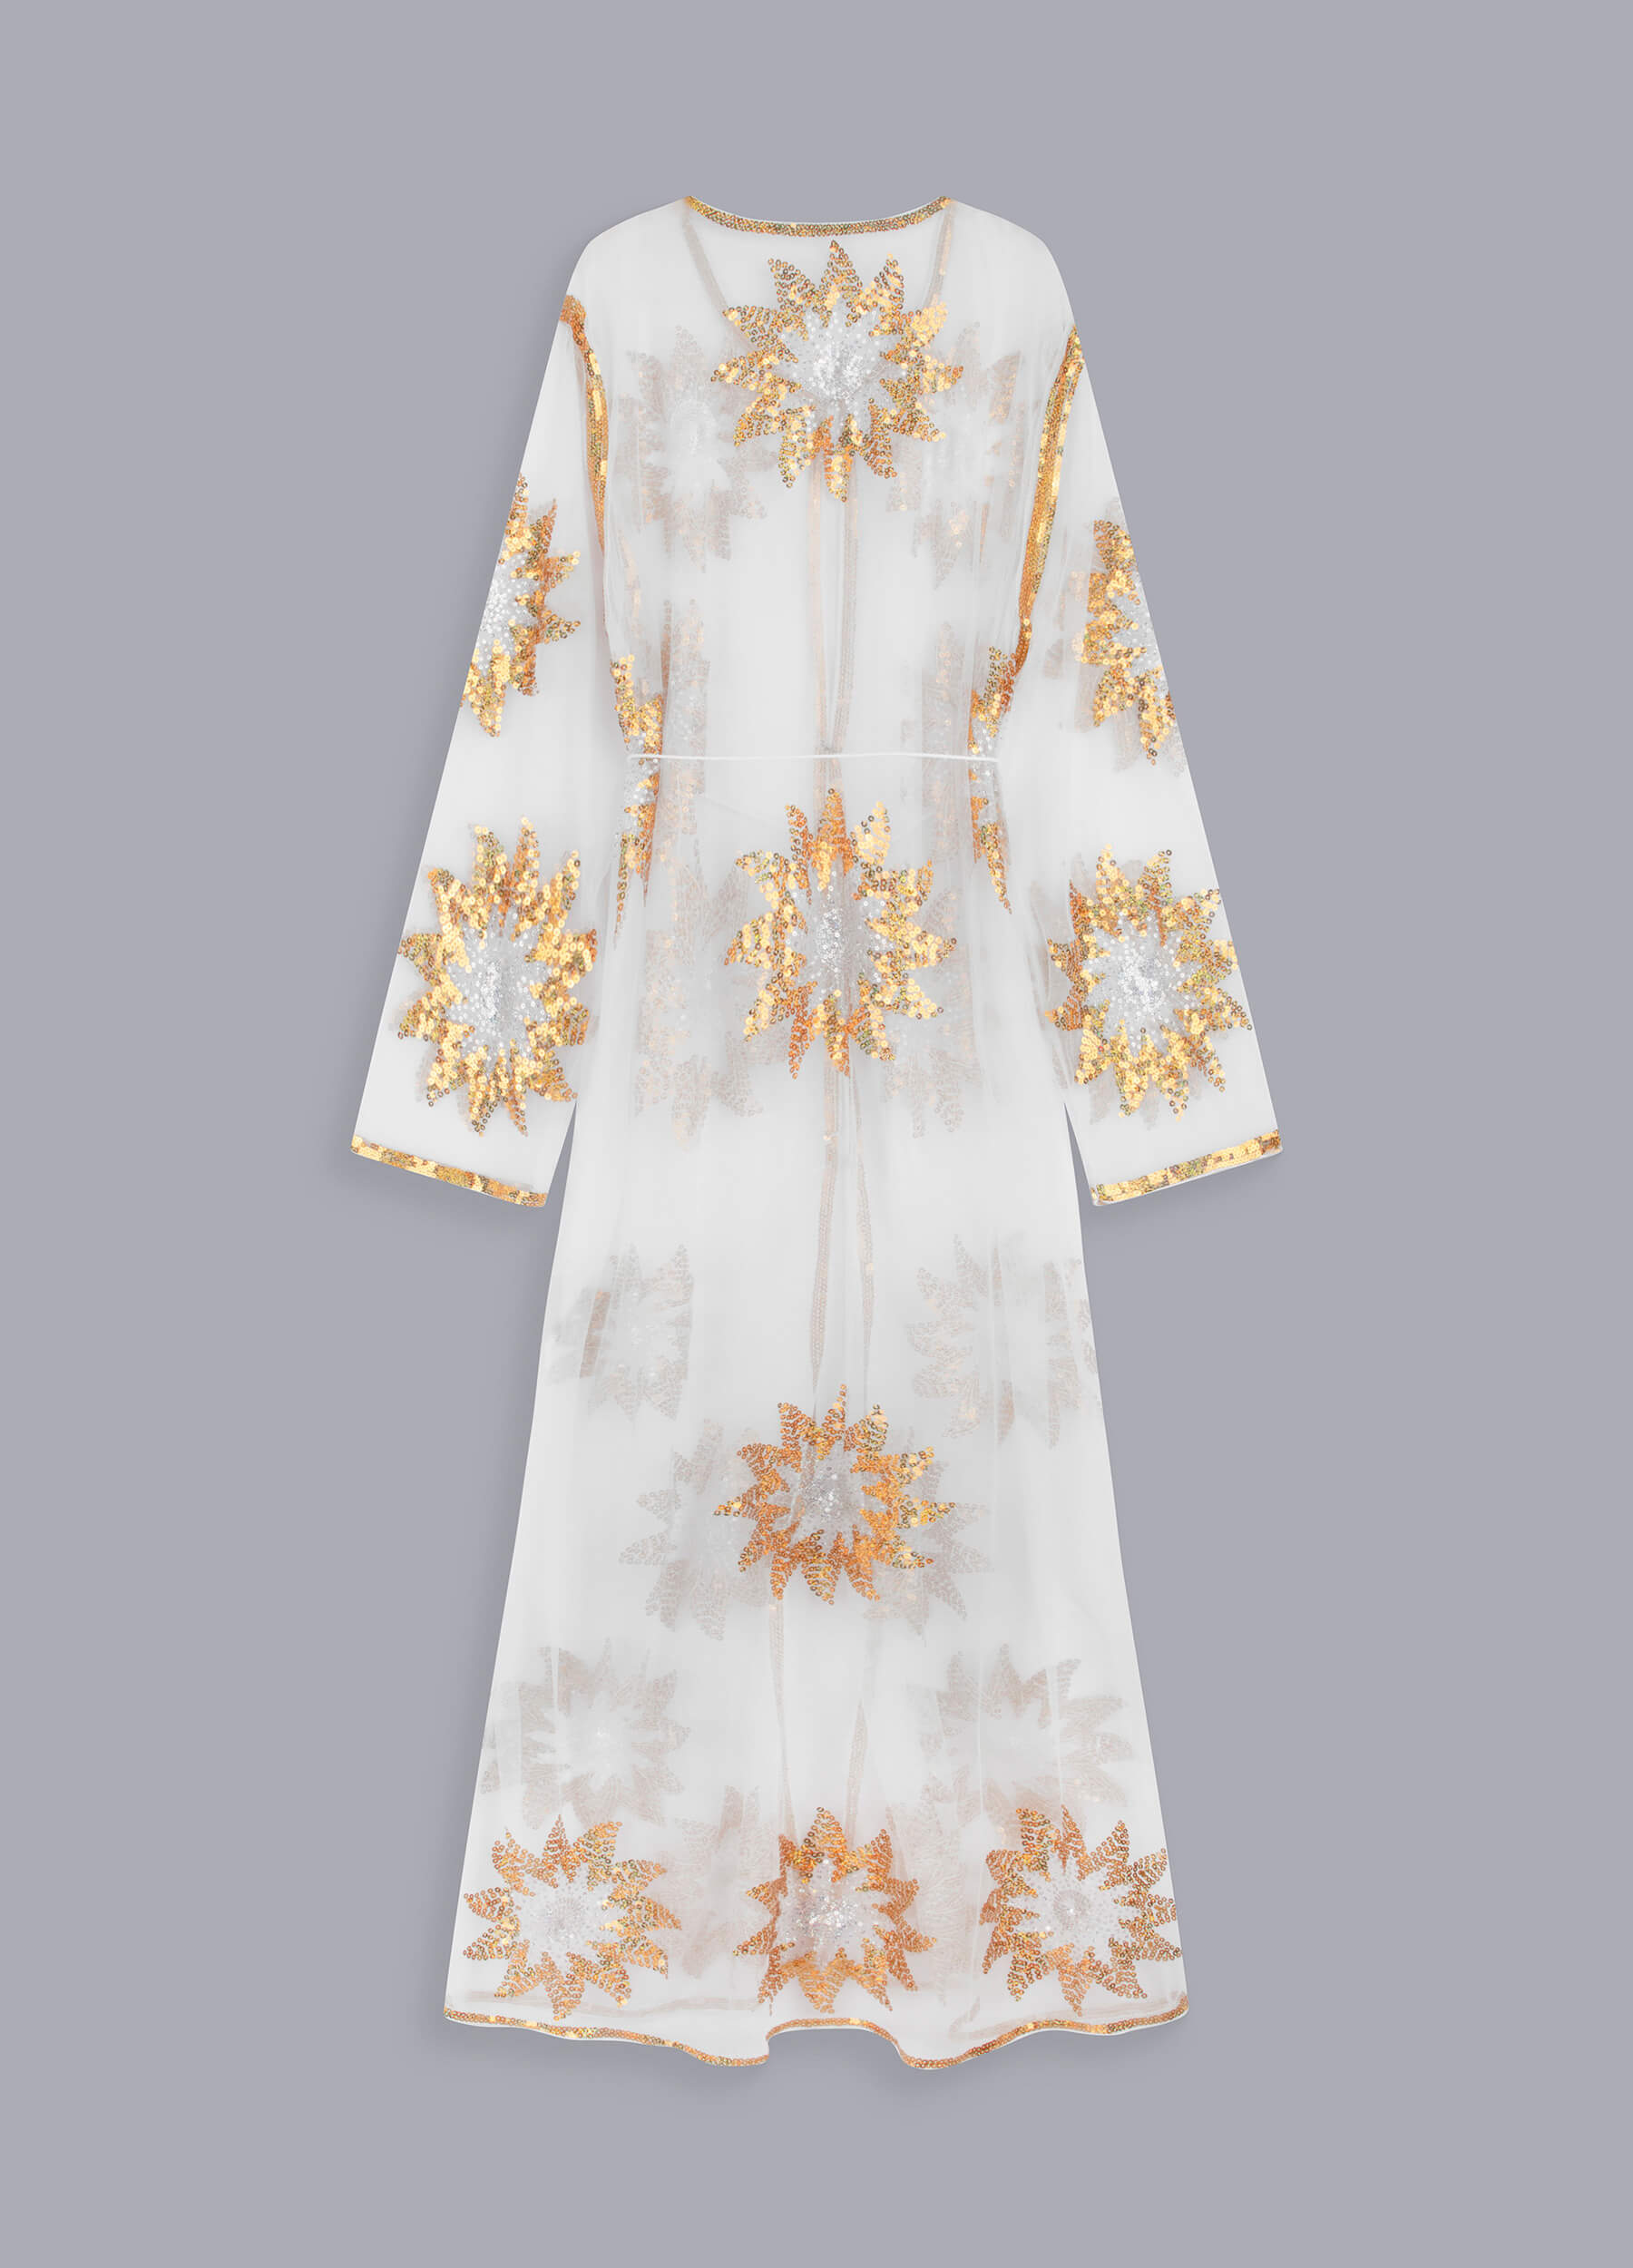 MECALA Women's Floral Sequin Maxi Mesh Kimono Cardigan Plus Size White Sheer Cardigan Kftan with Drawstring